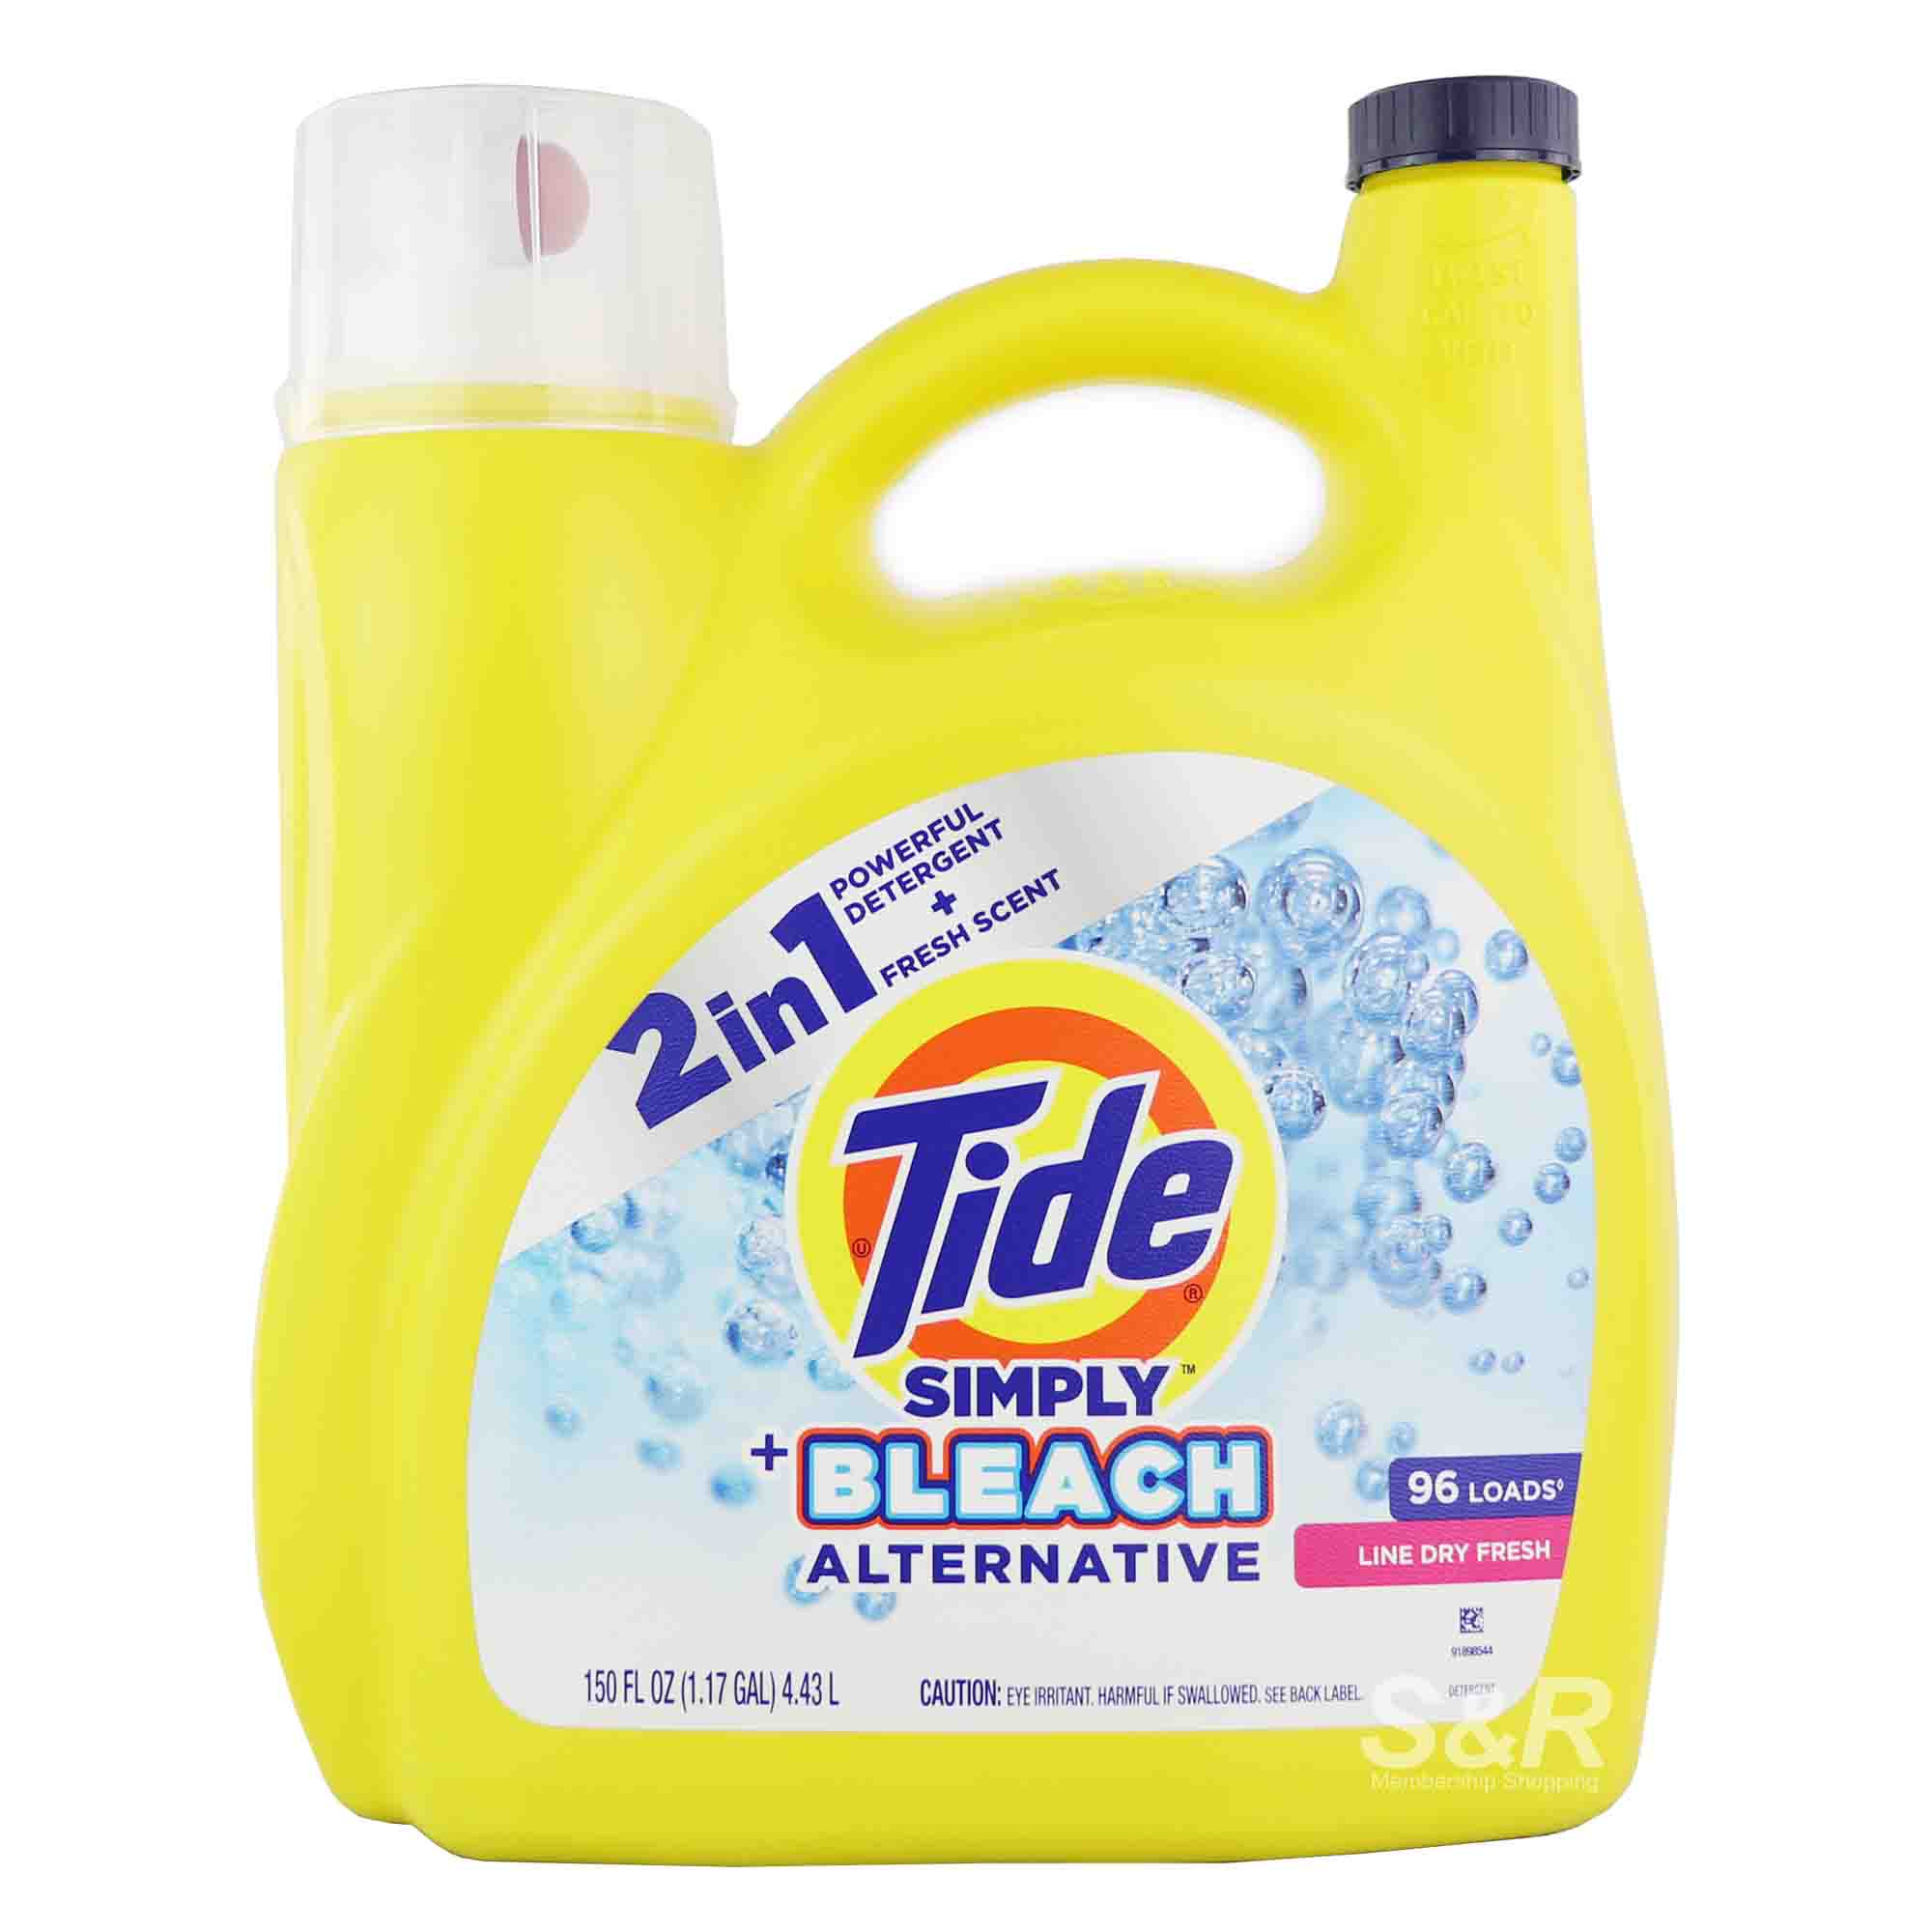 Tide Simply Plus Bleach Alternative Liquid Laundry Detergent 4.43L